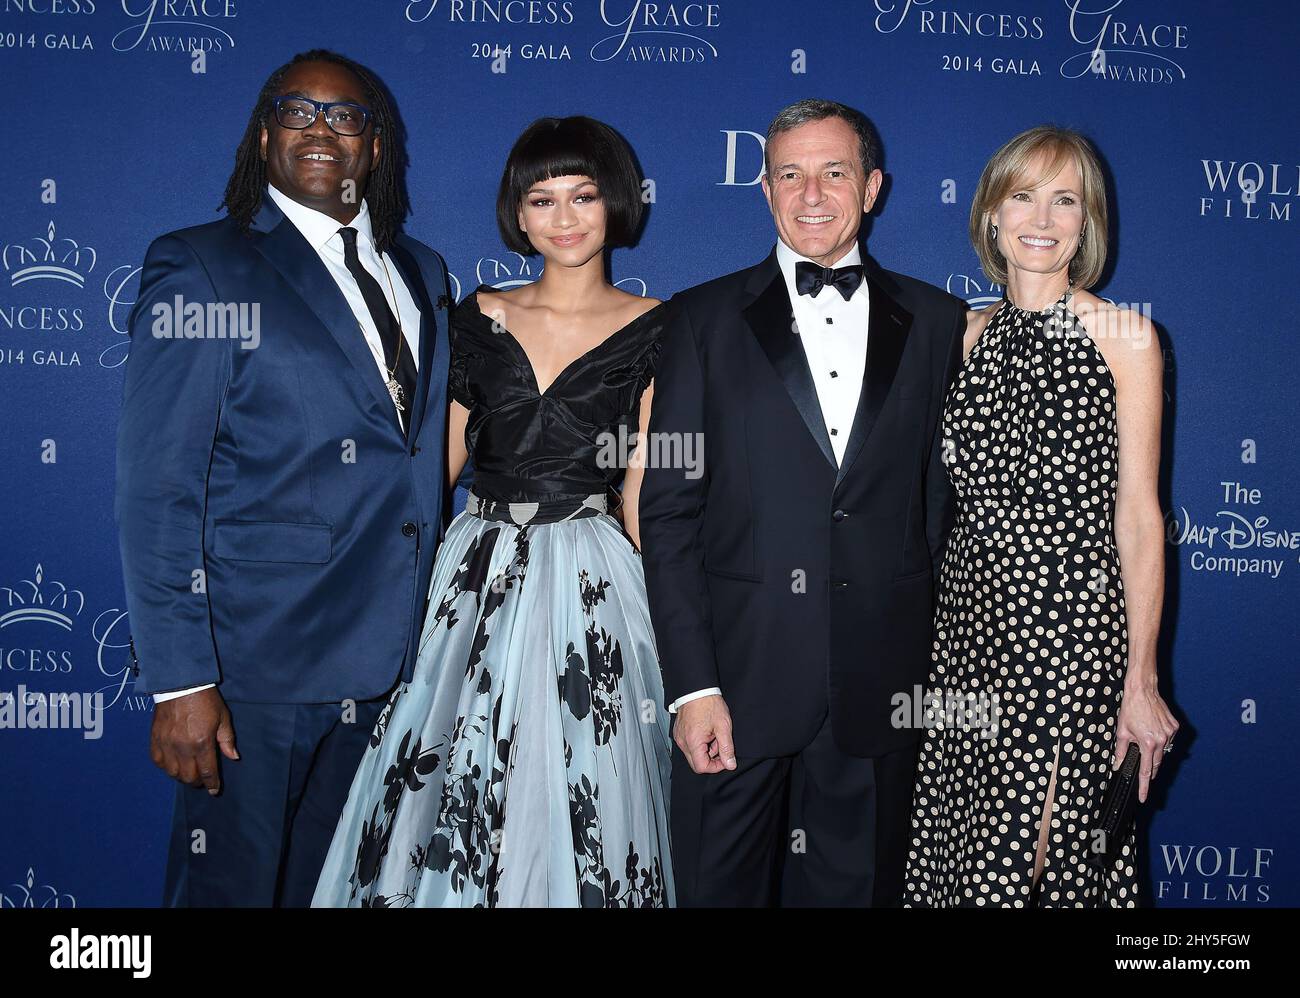 Zendaya and Her Amazing Bob Graced the Louis Vuitton Fall 2023